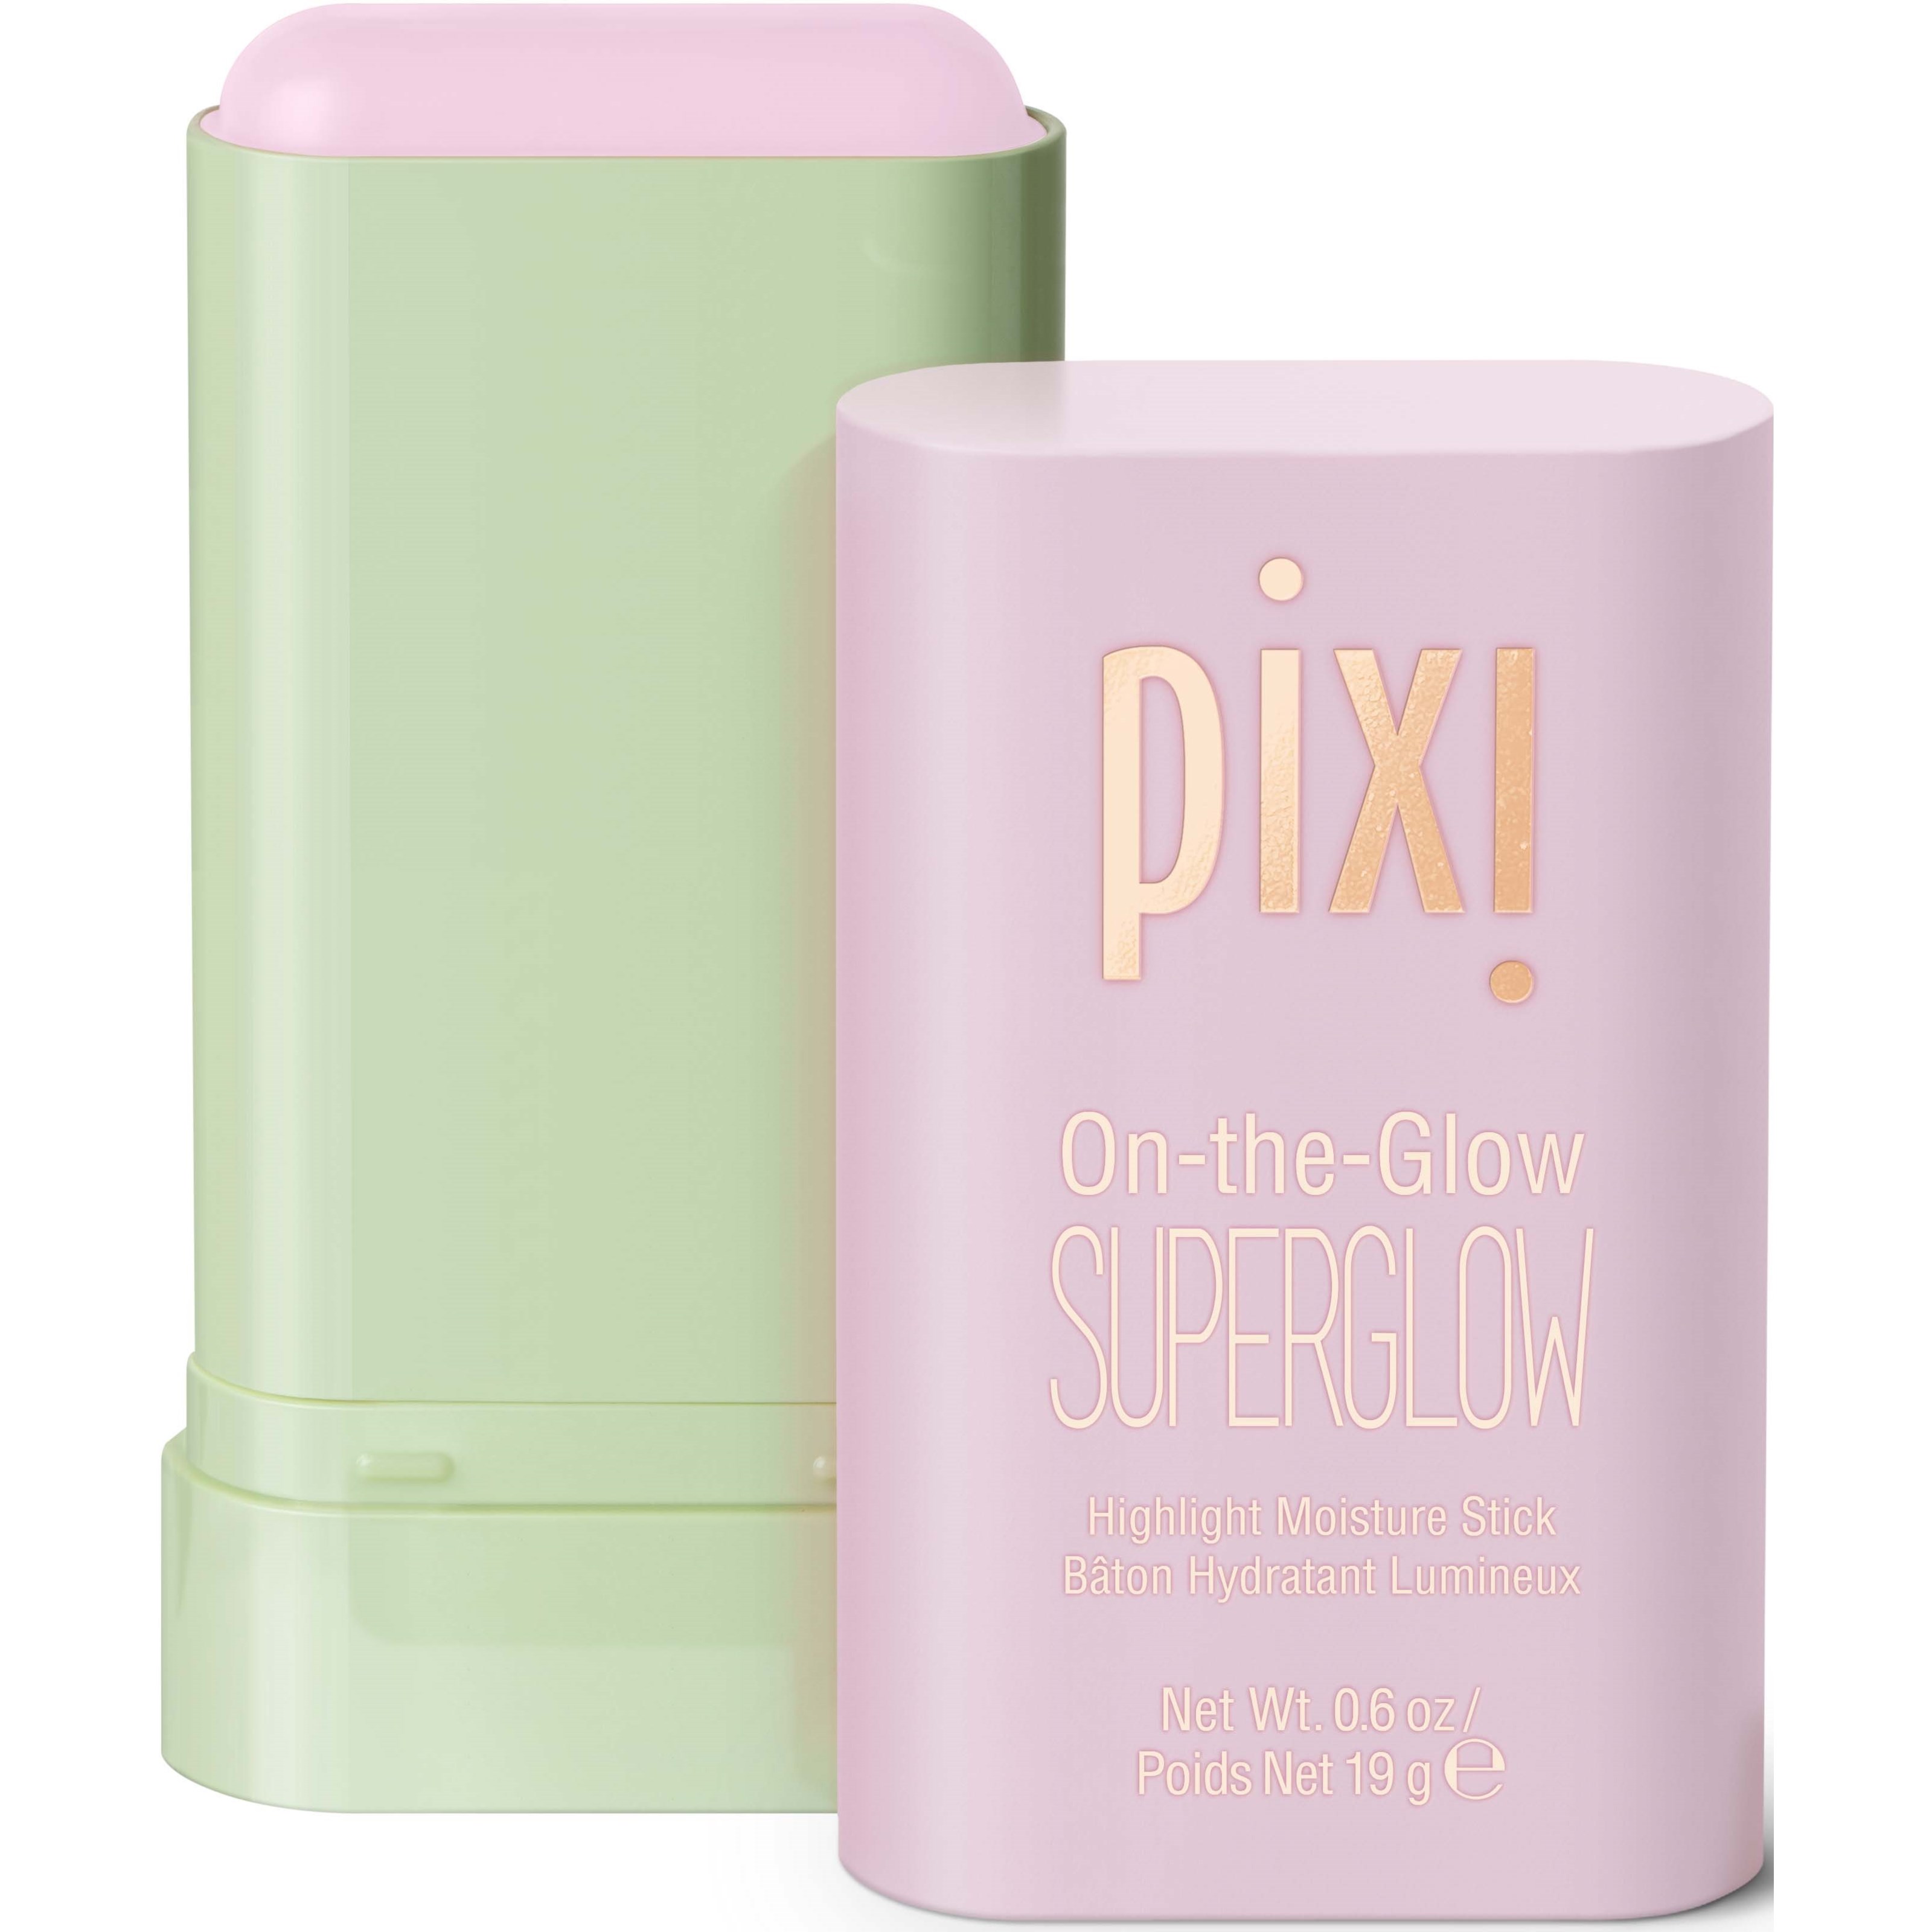 Pixi On-the-Glow SUPERGLOW PetalDew - Silver